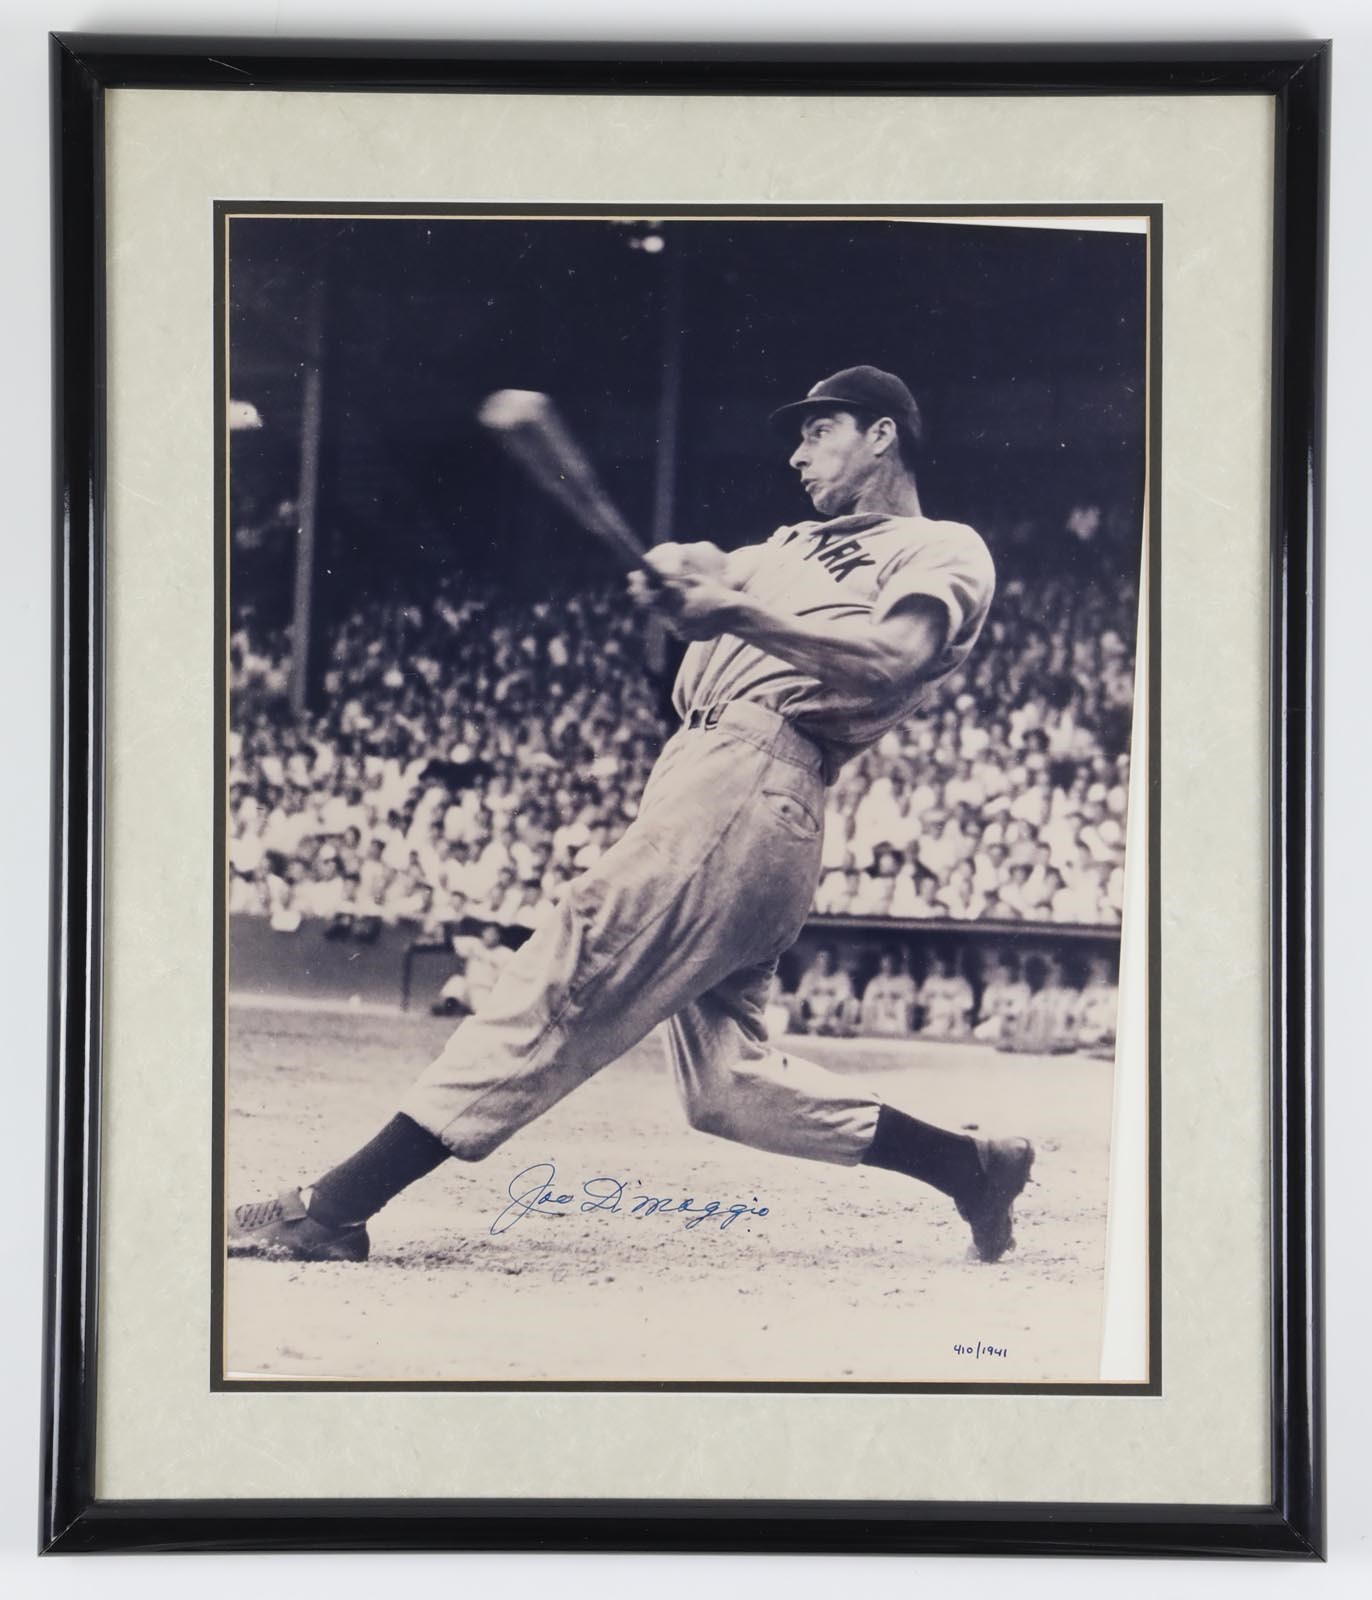 Baseball Autographs - 1990 Joe DiMaggio Signed Limited Edition “1941” Photograph